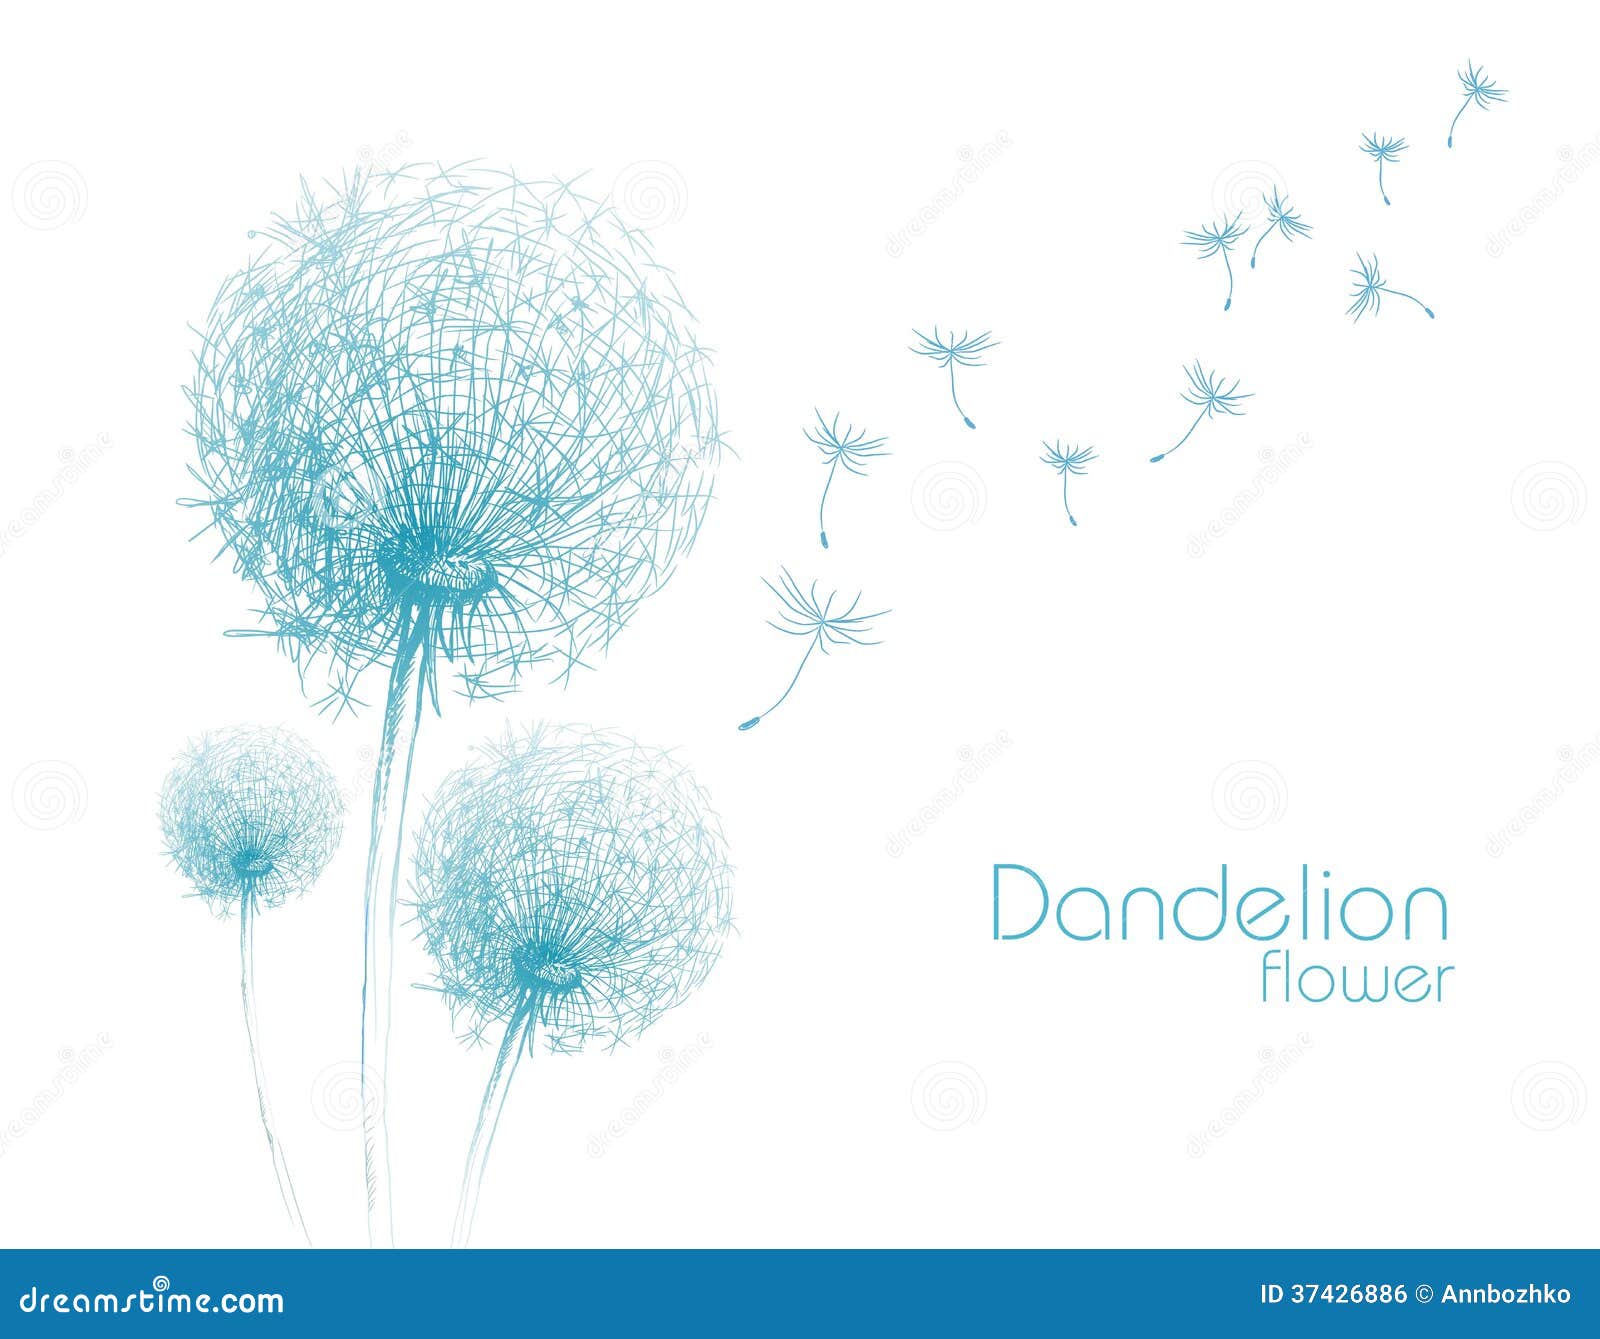  Flower dandelion sketch stock vector. Illustration of herb - 37426886